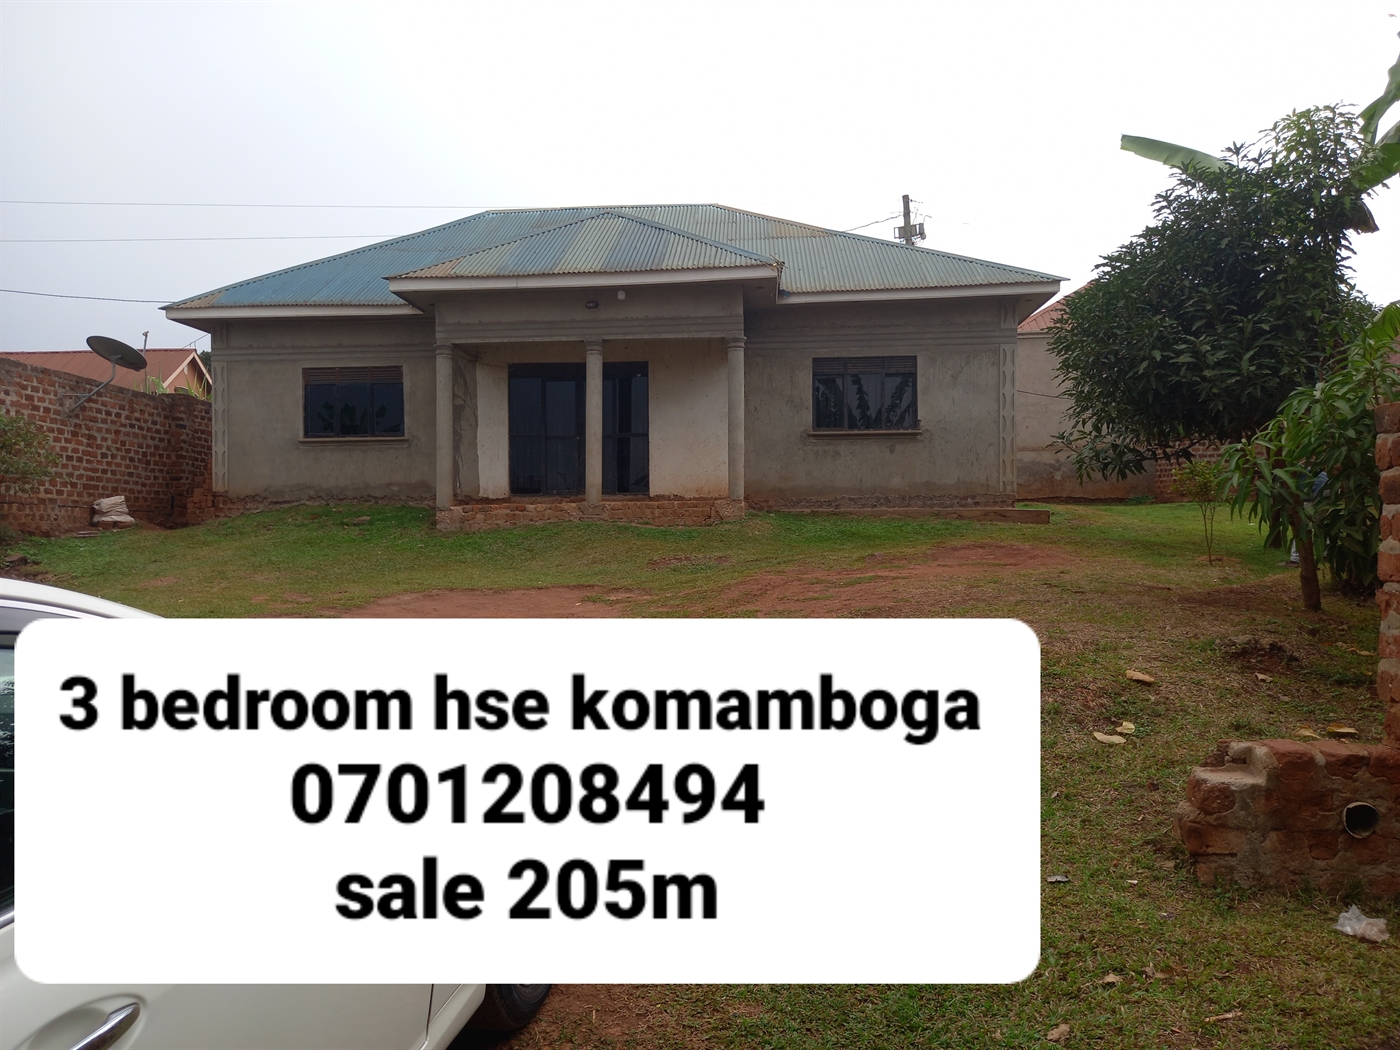 Shell House for sale in Komamboga Kampala